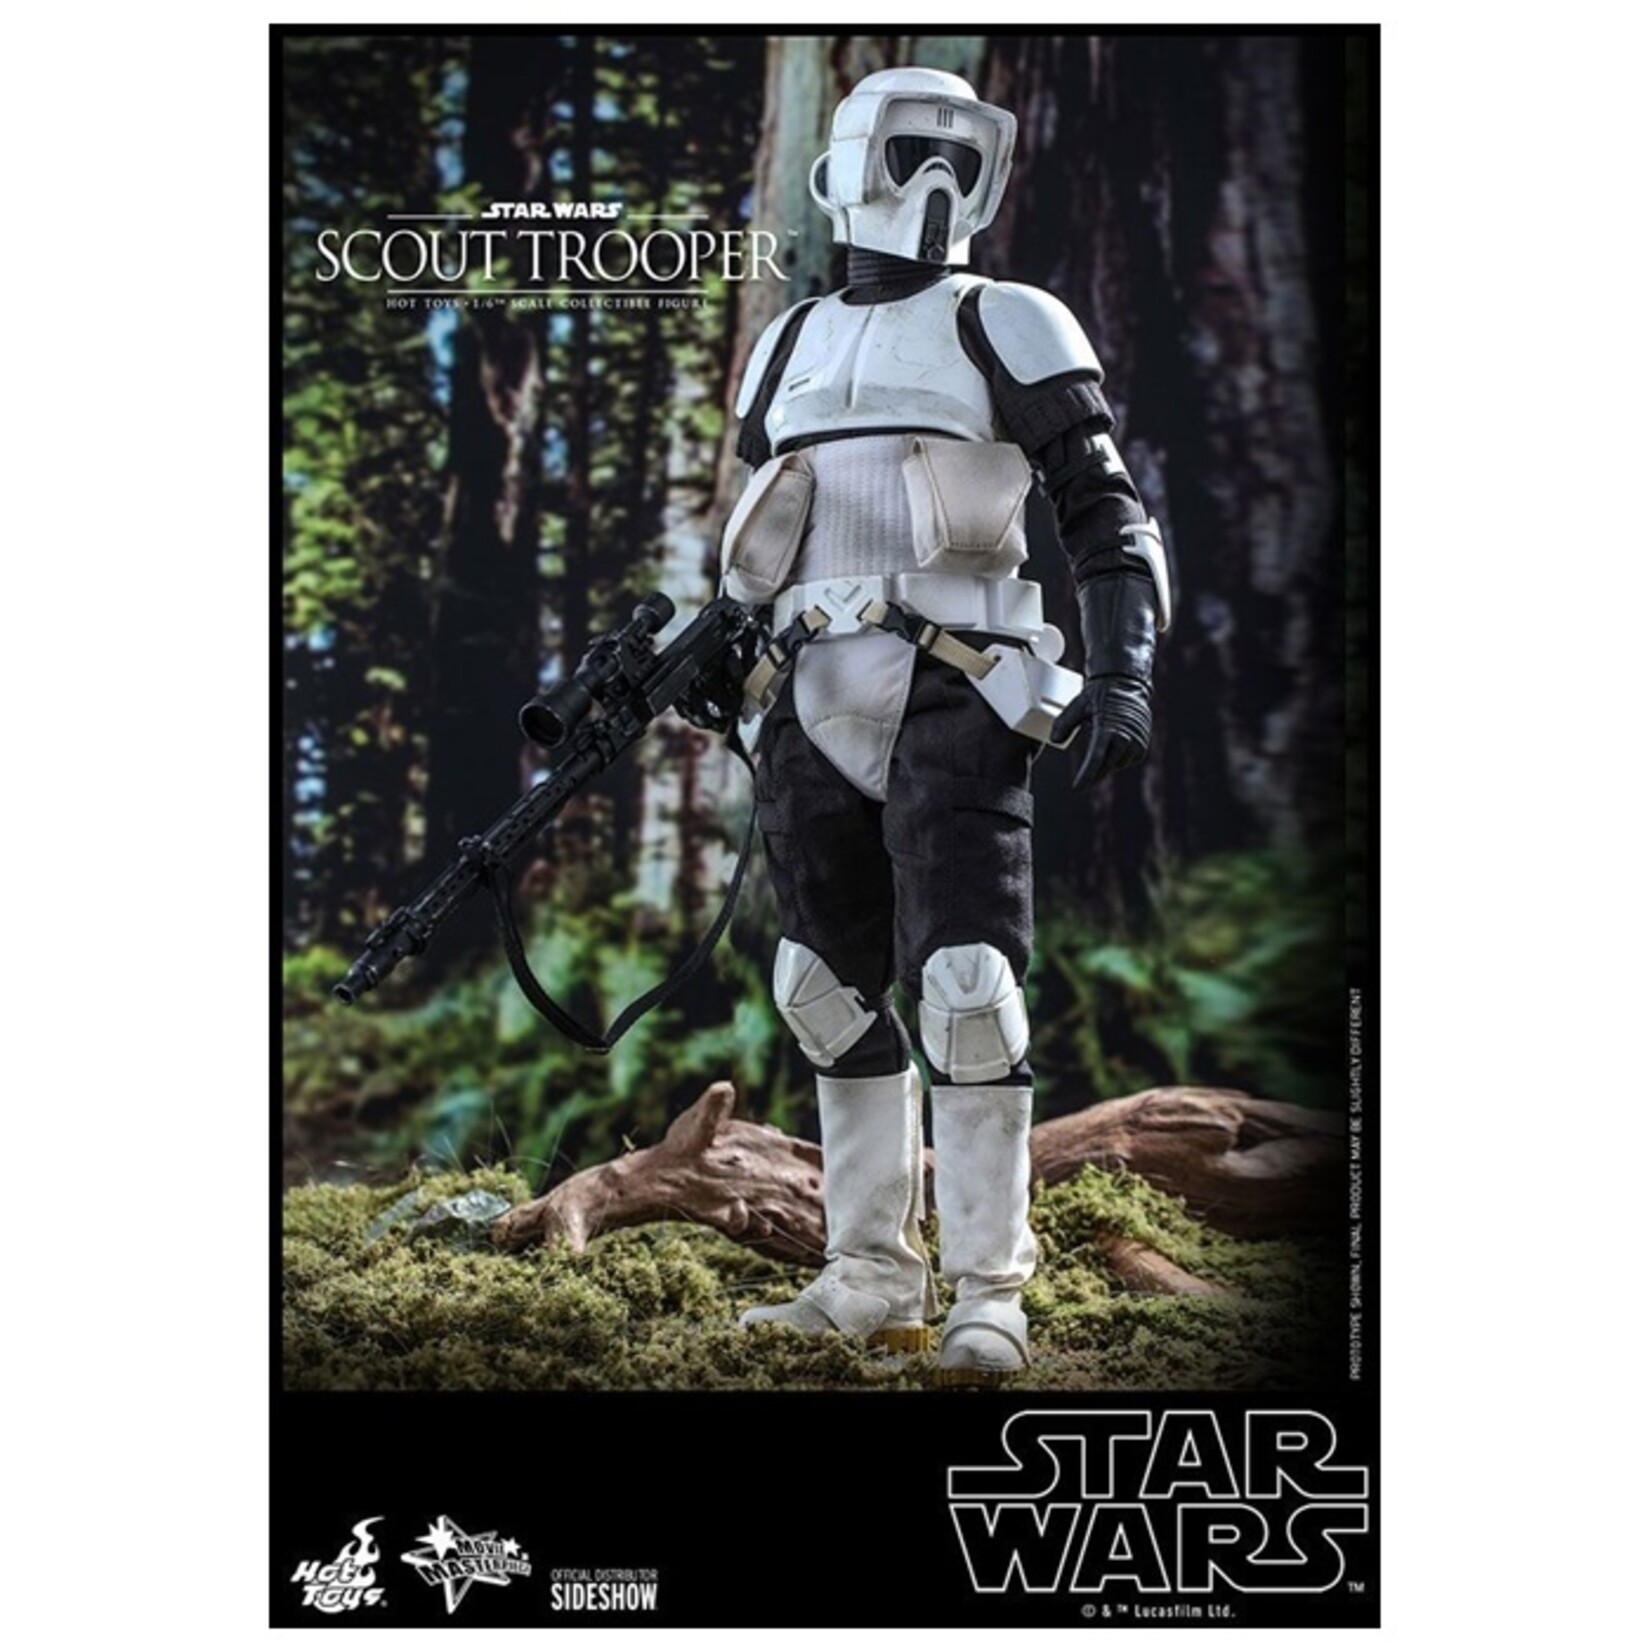 Hot toys Star Wars Episode VI Action Figure 1/6 Scout Trooper 30 cm